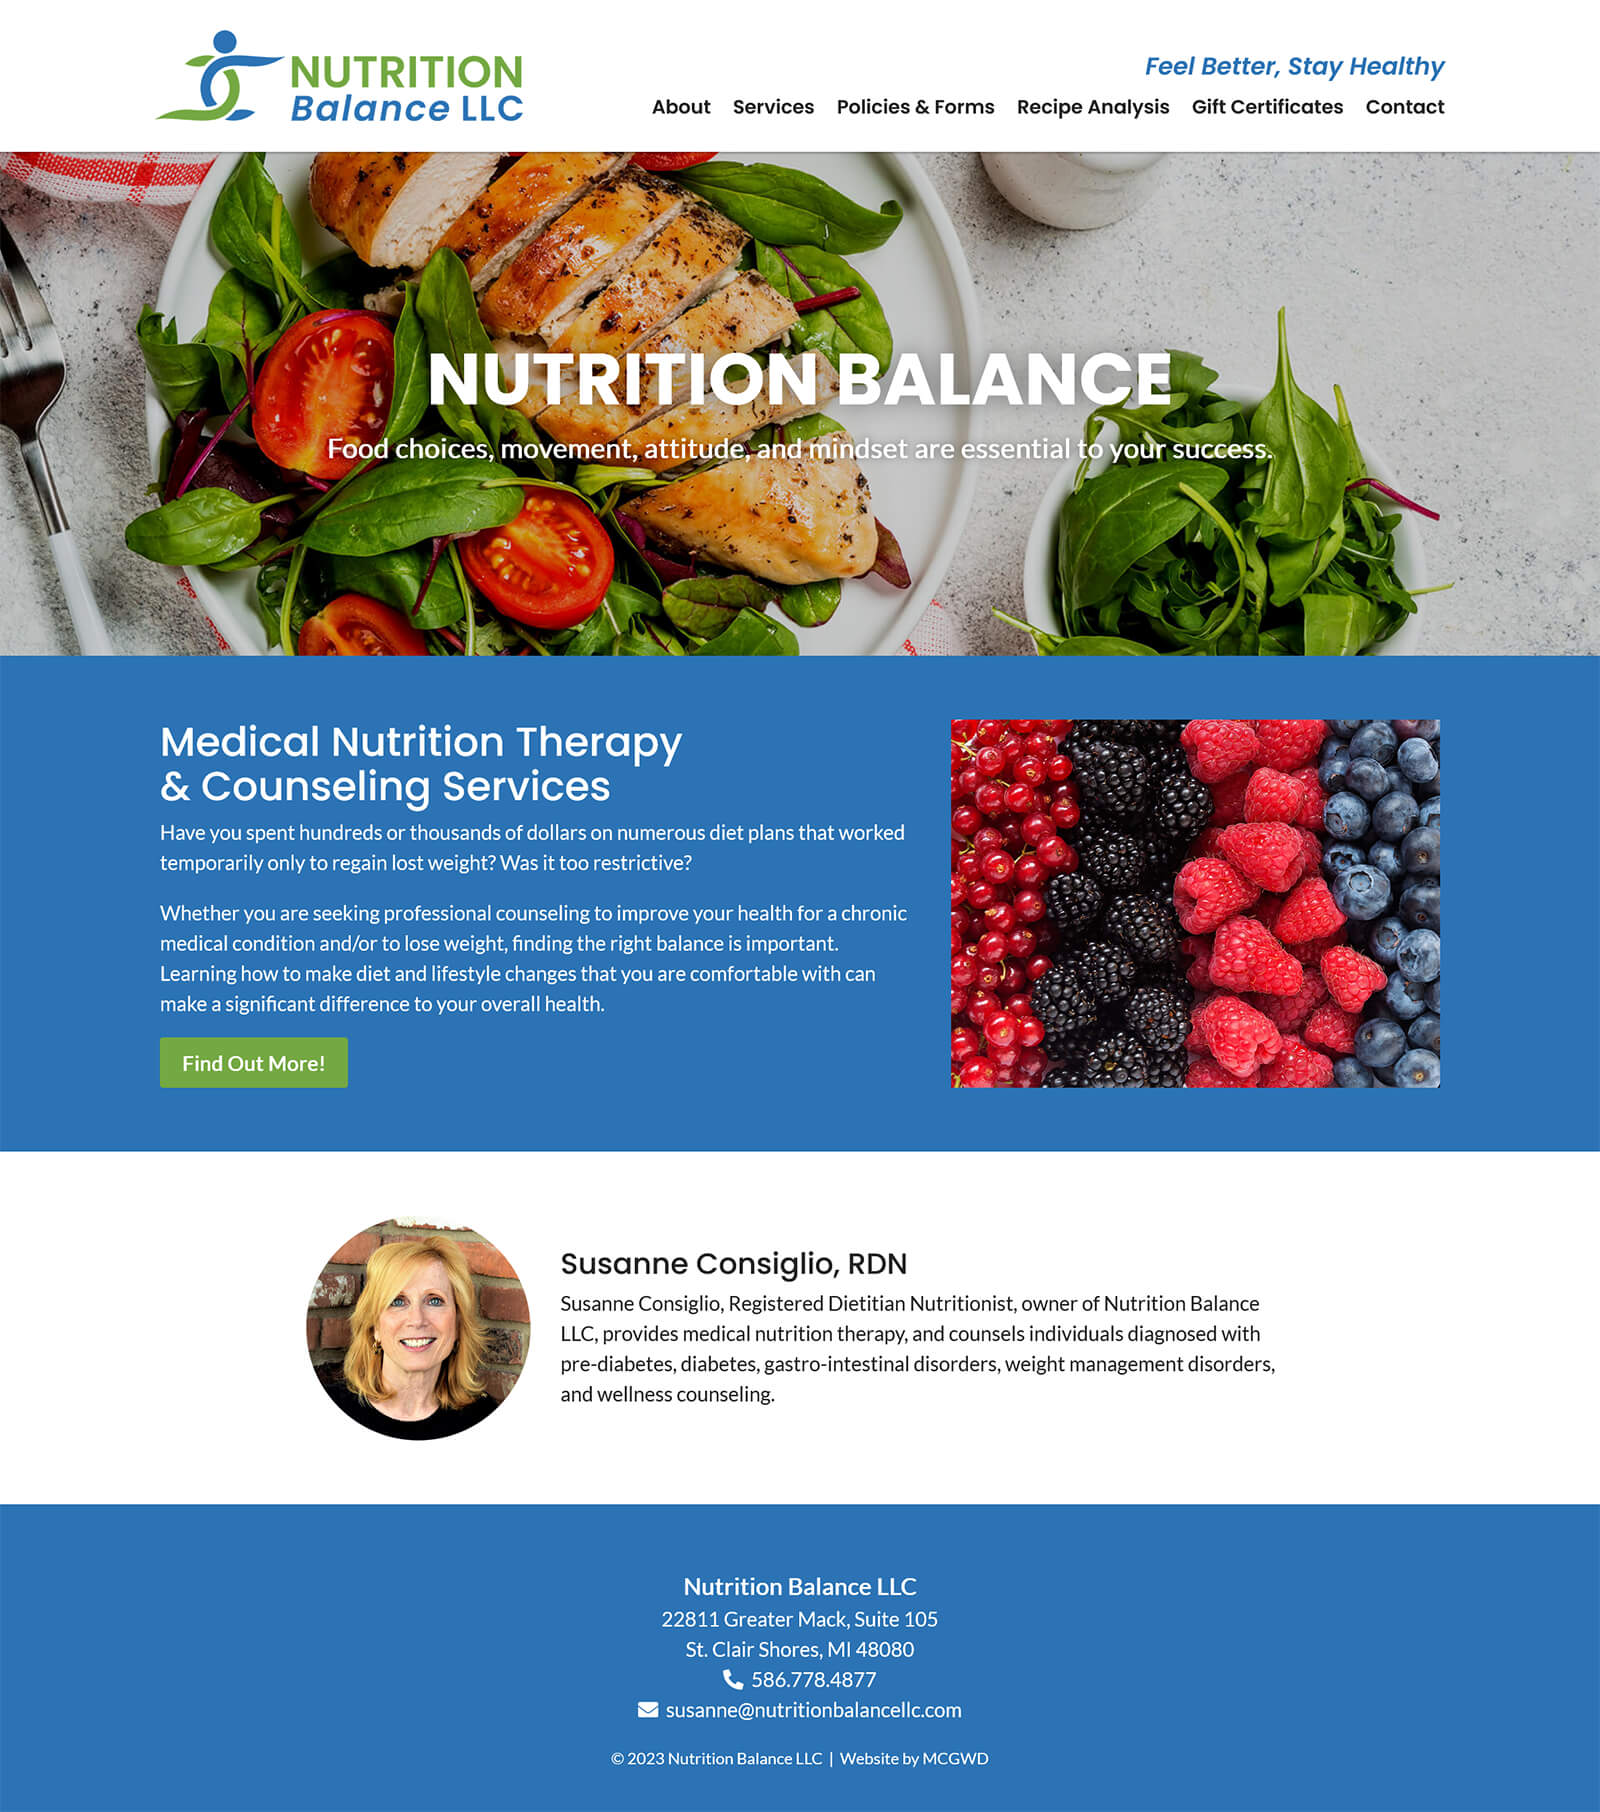 Nutrition Balance, LLC